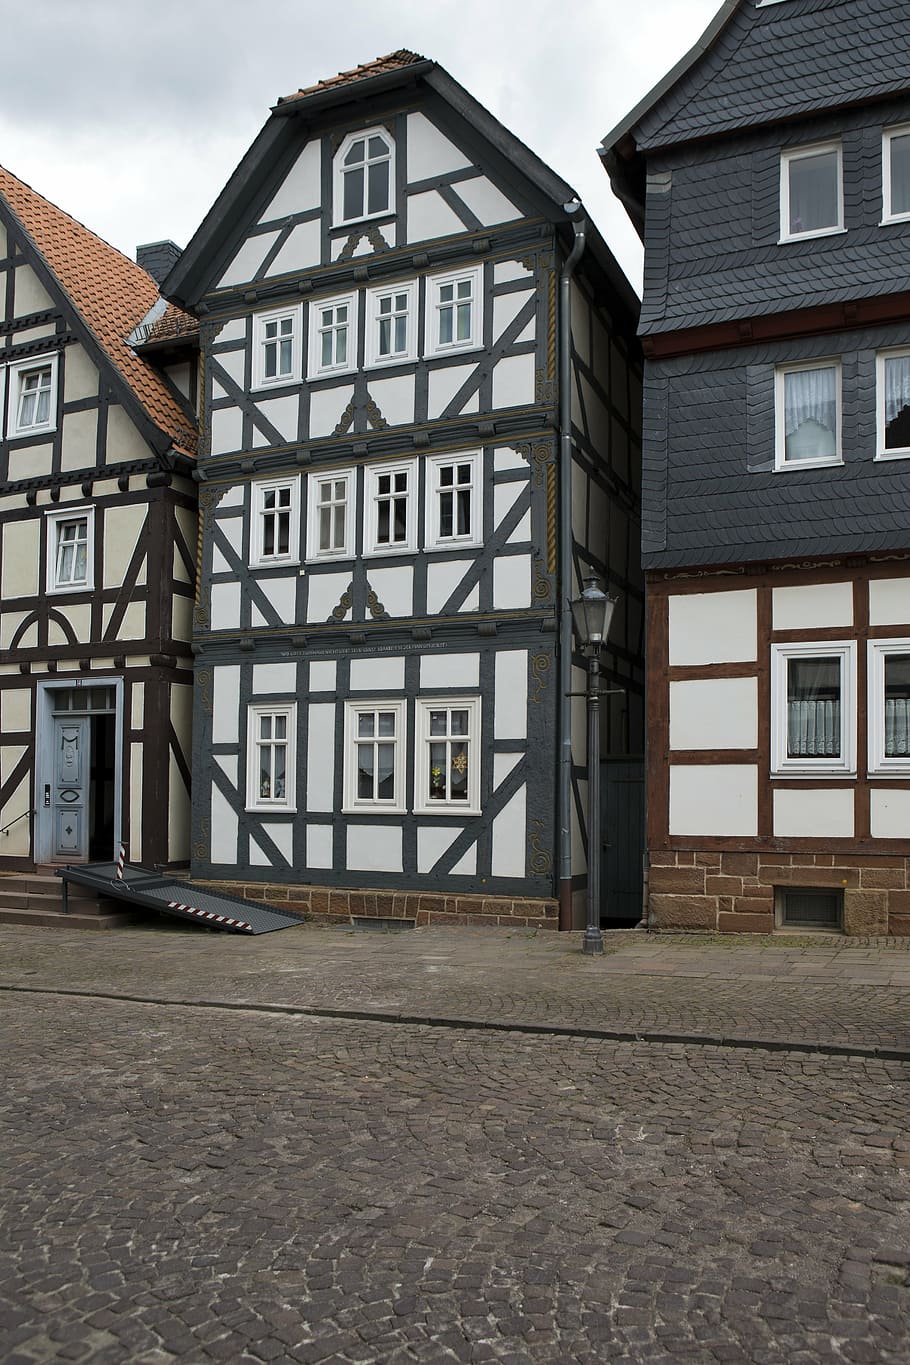 frankenberg, hessen, germany, architecture, timber framed houses, HD wallpaper